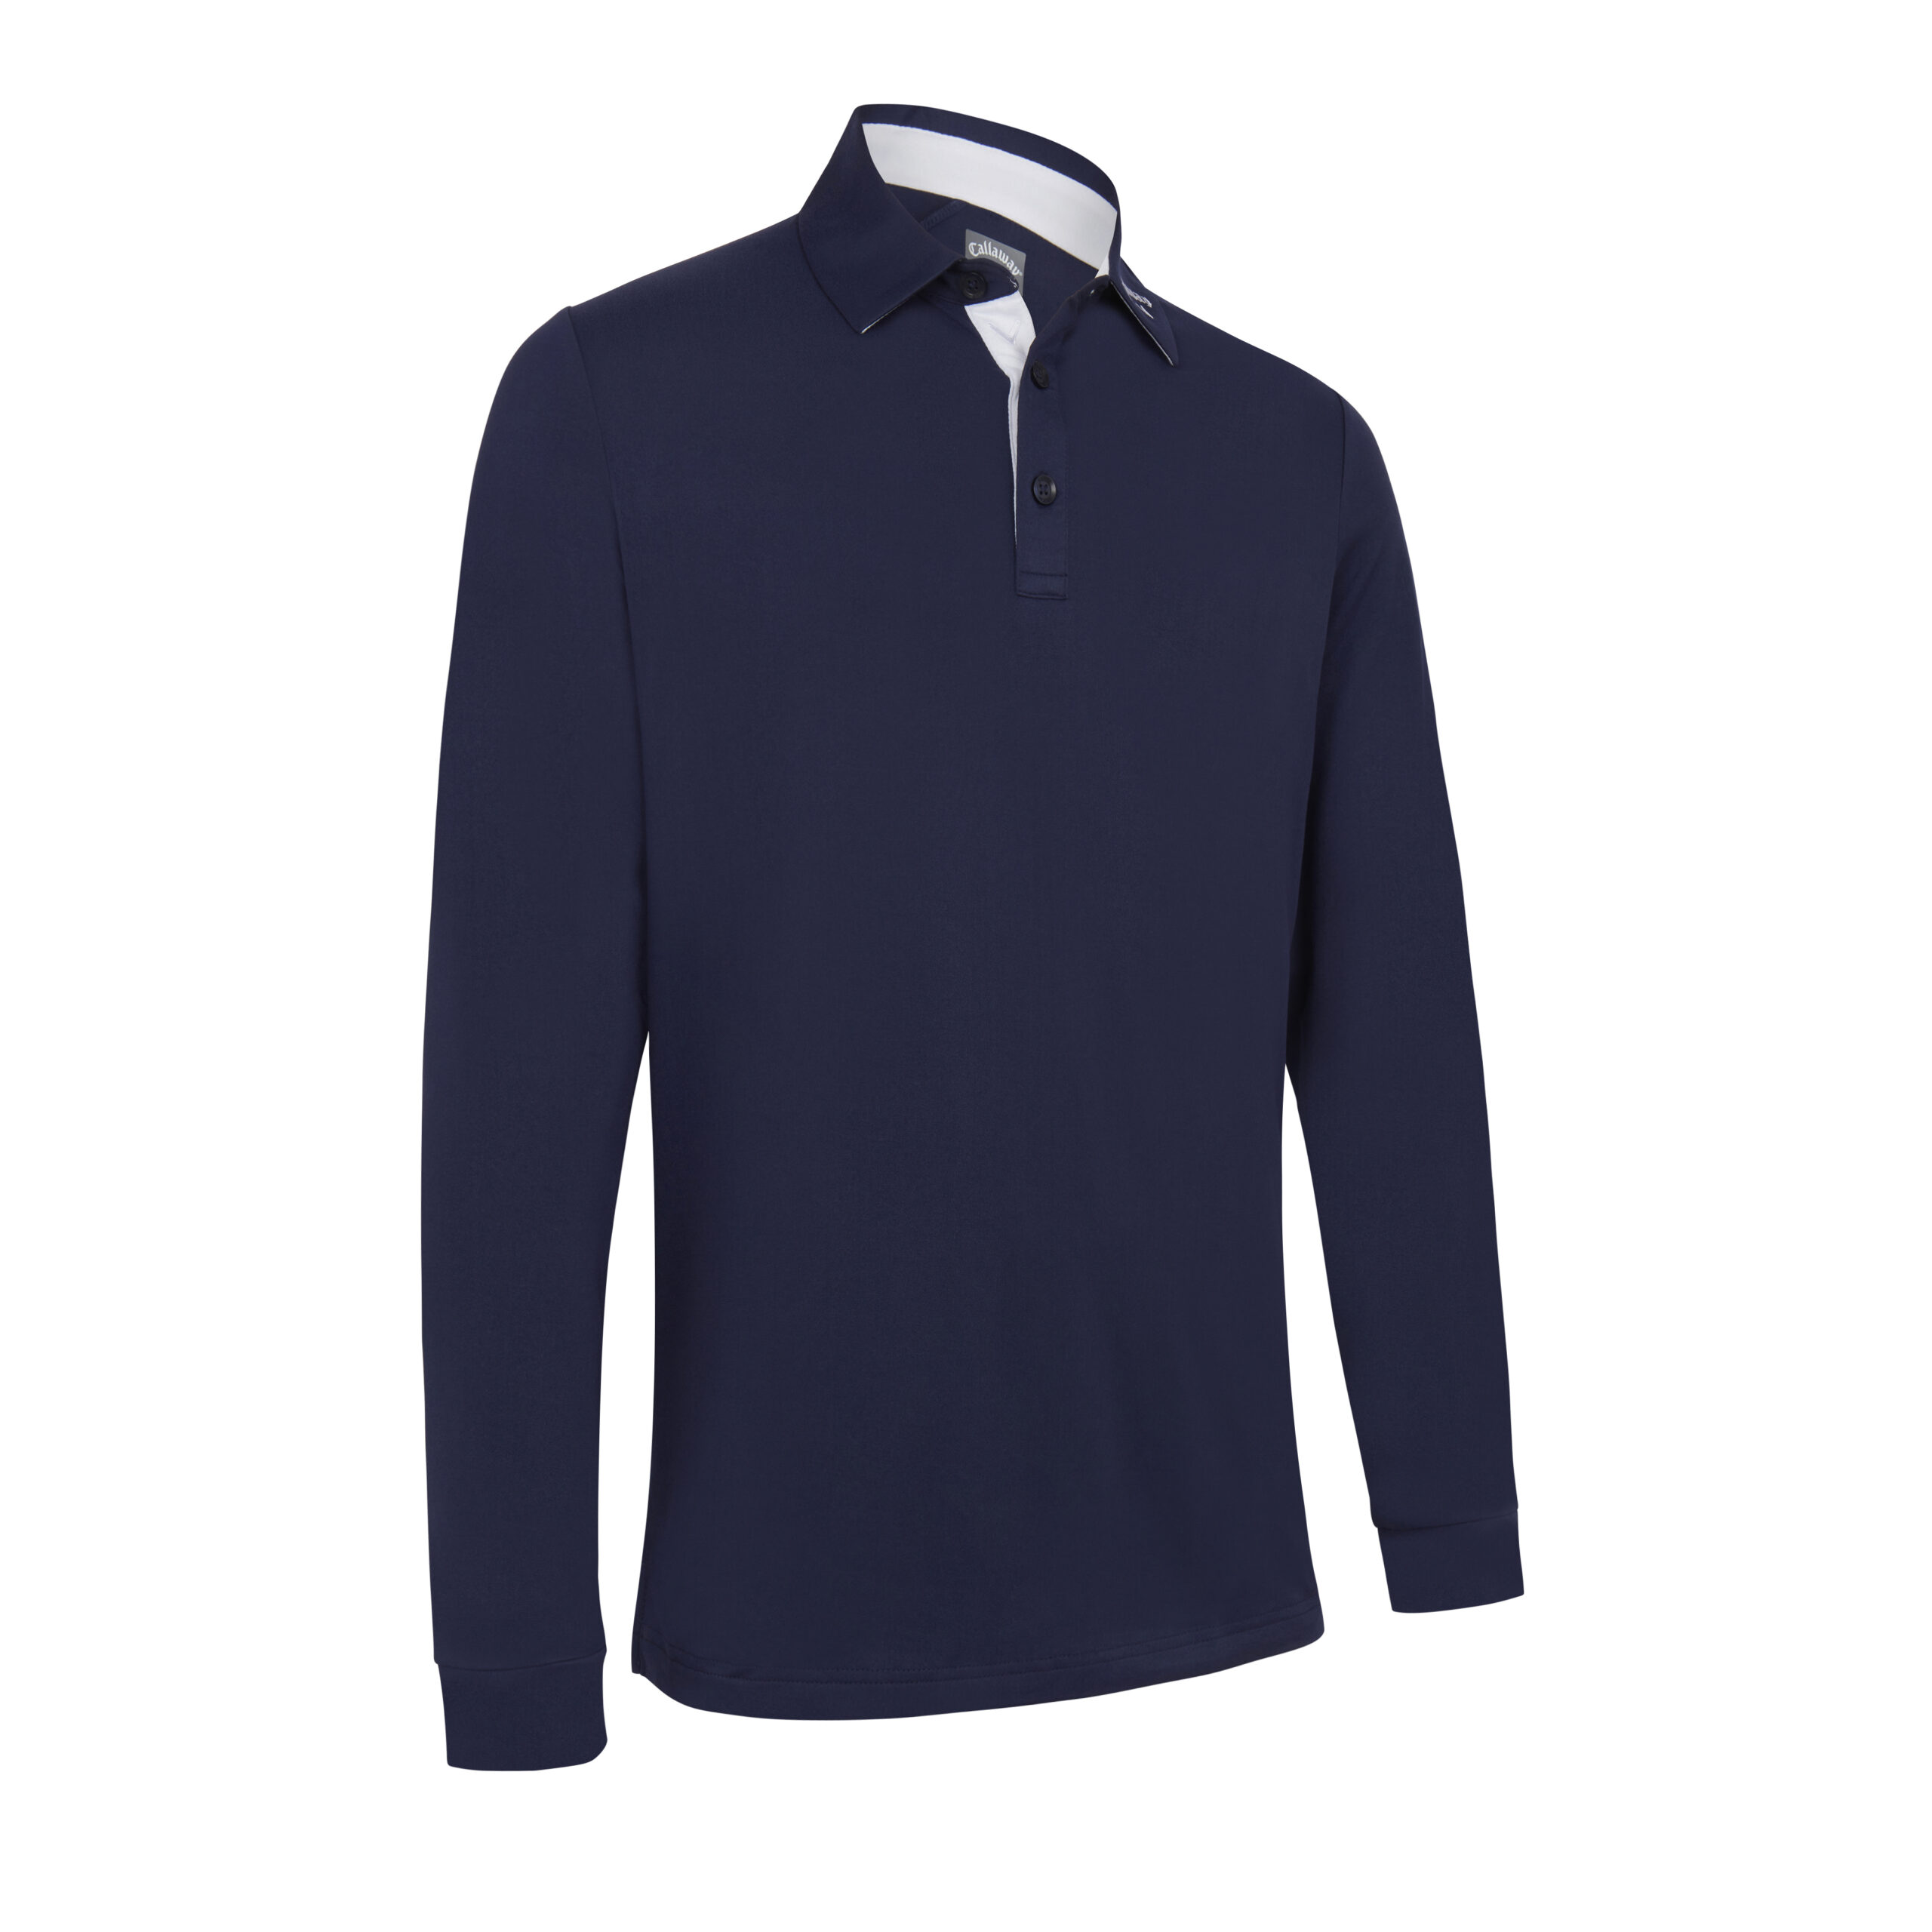 Callaway Performance pánské golfové triko s dlouhým rukávem, tmavě modré, vel. XXL